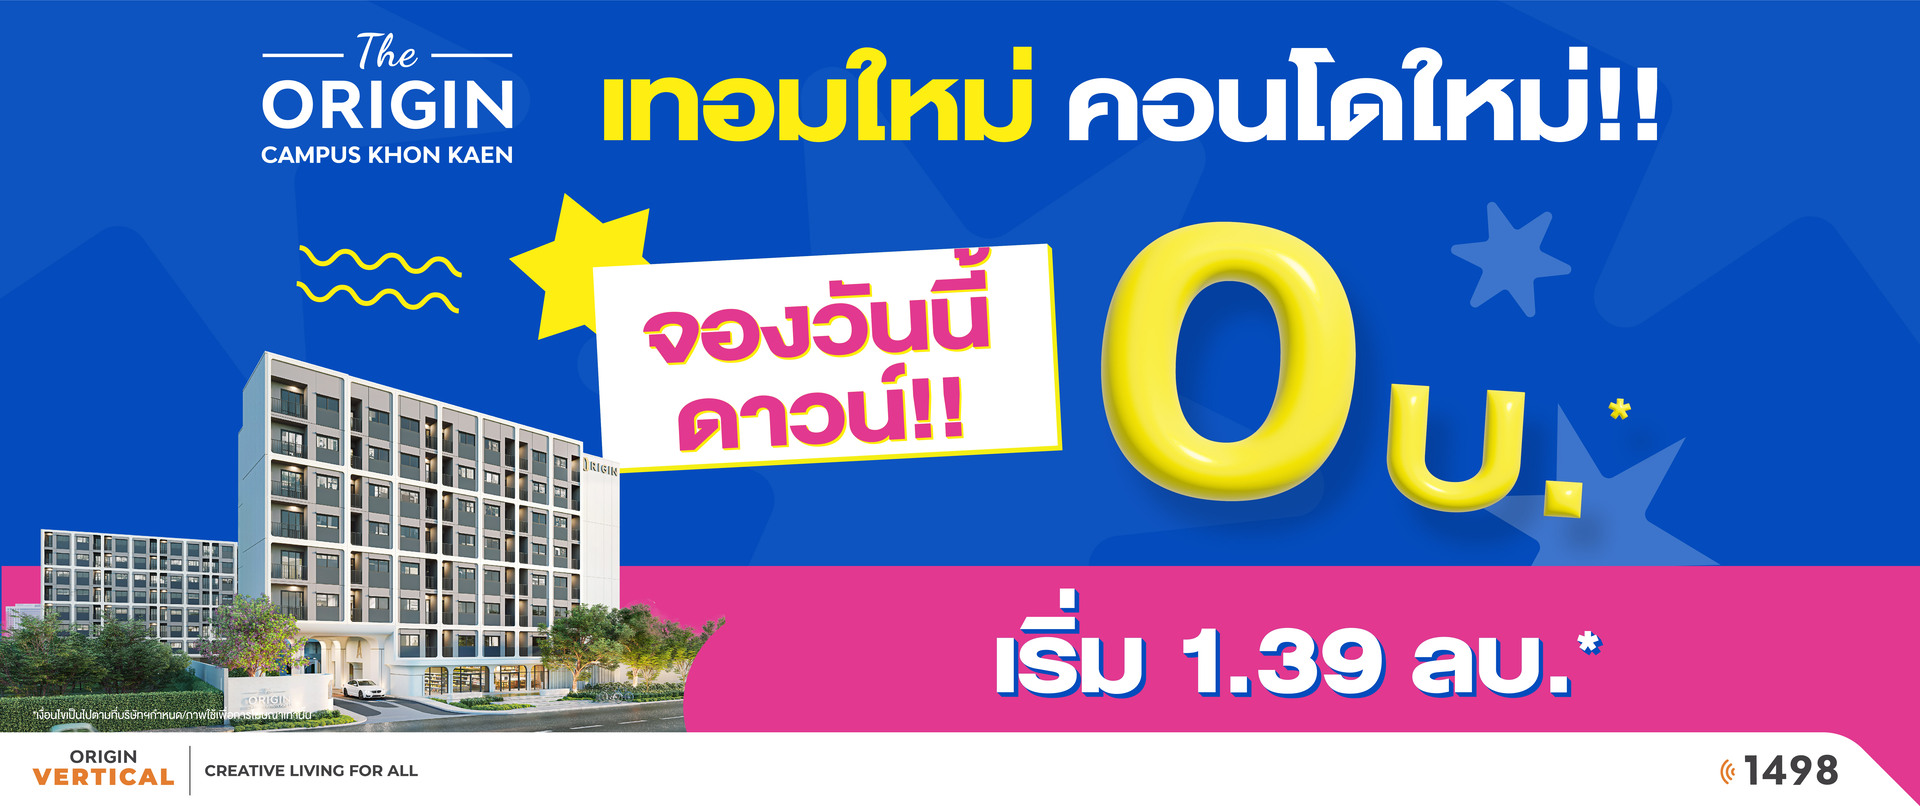 The Origin Campus Khon kaen ads